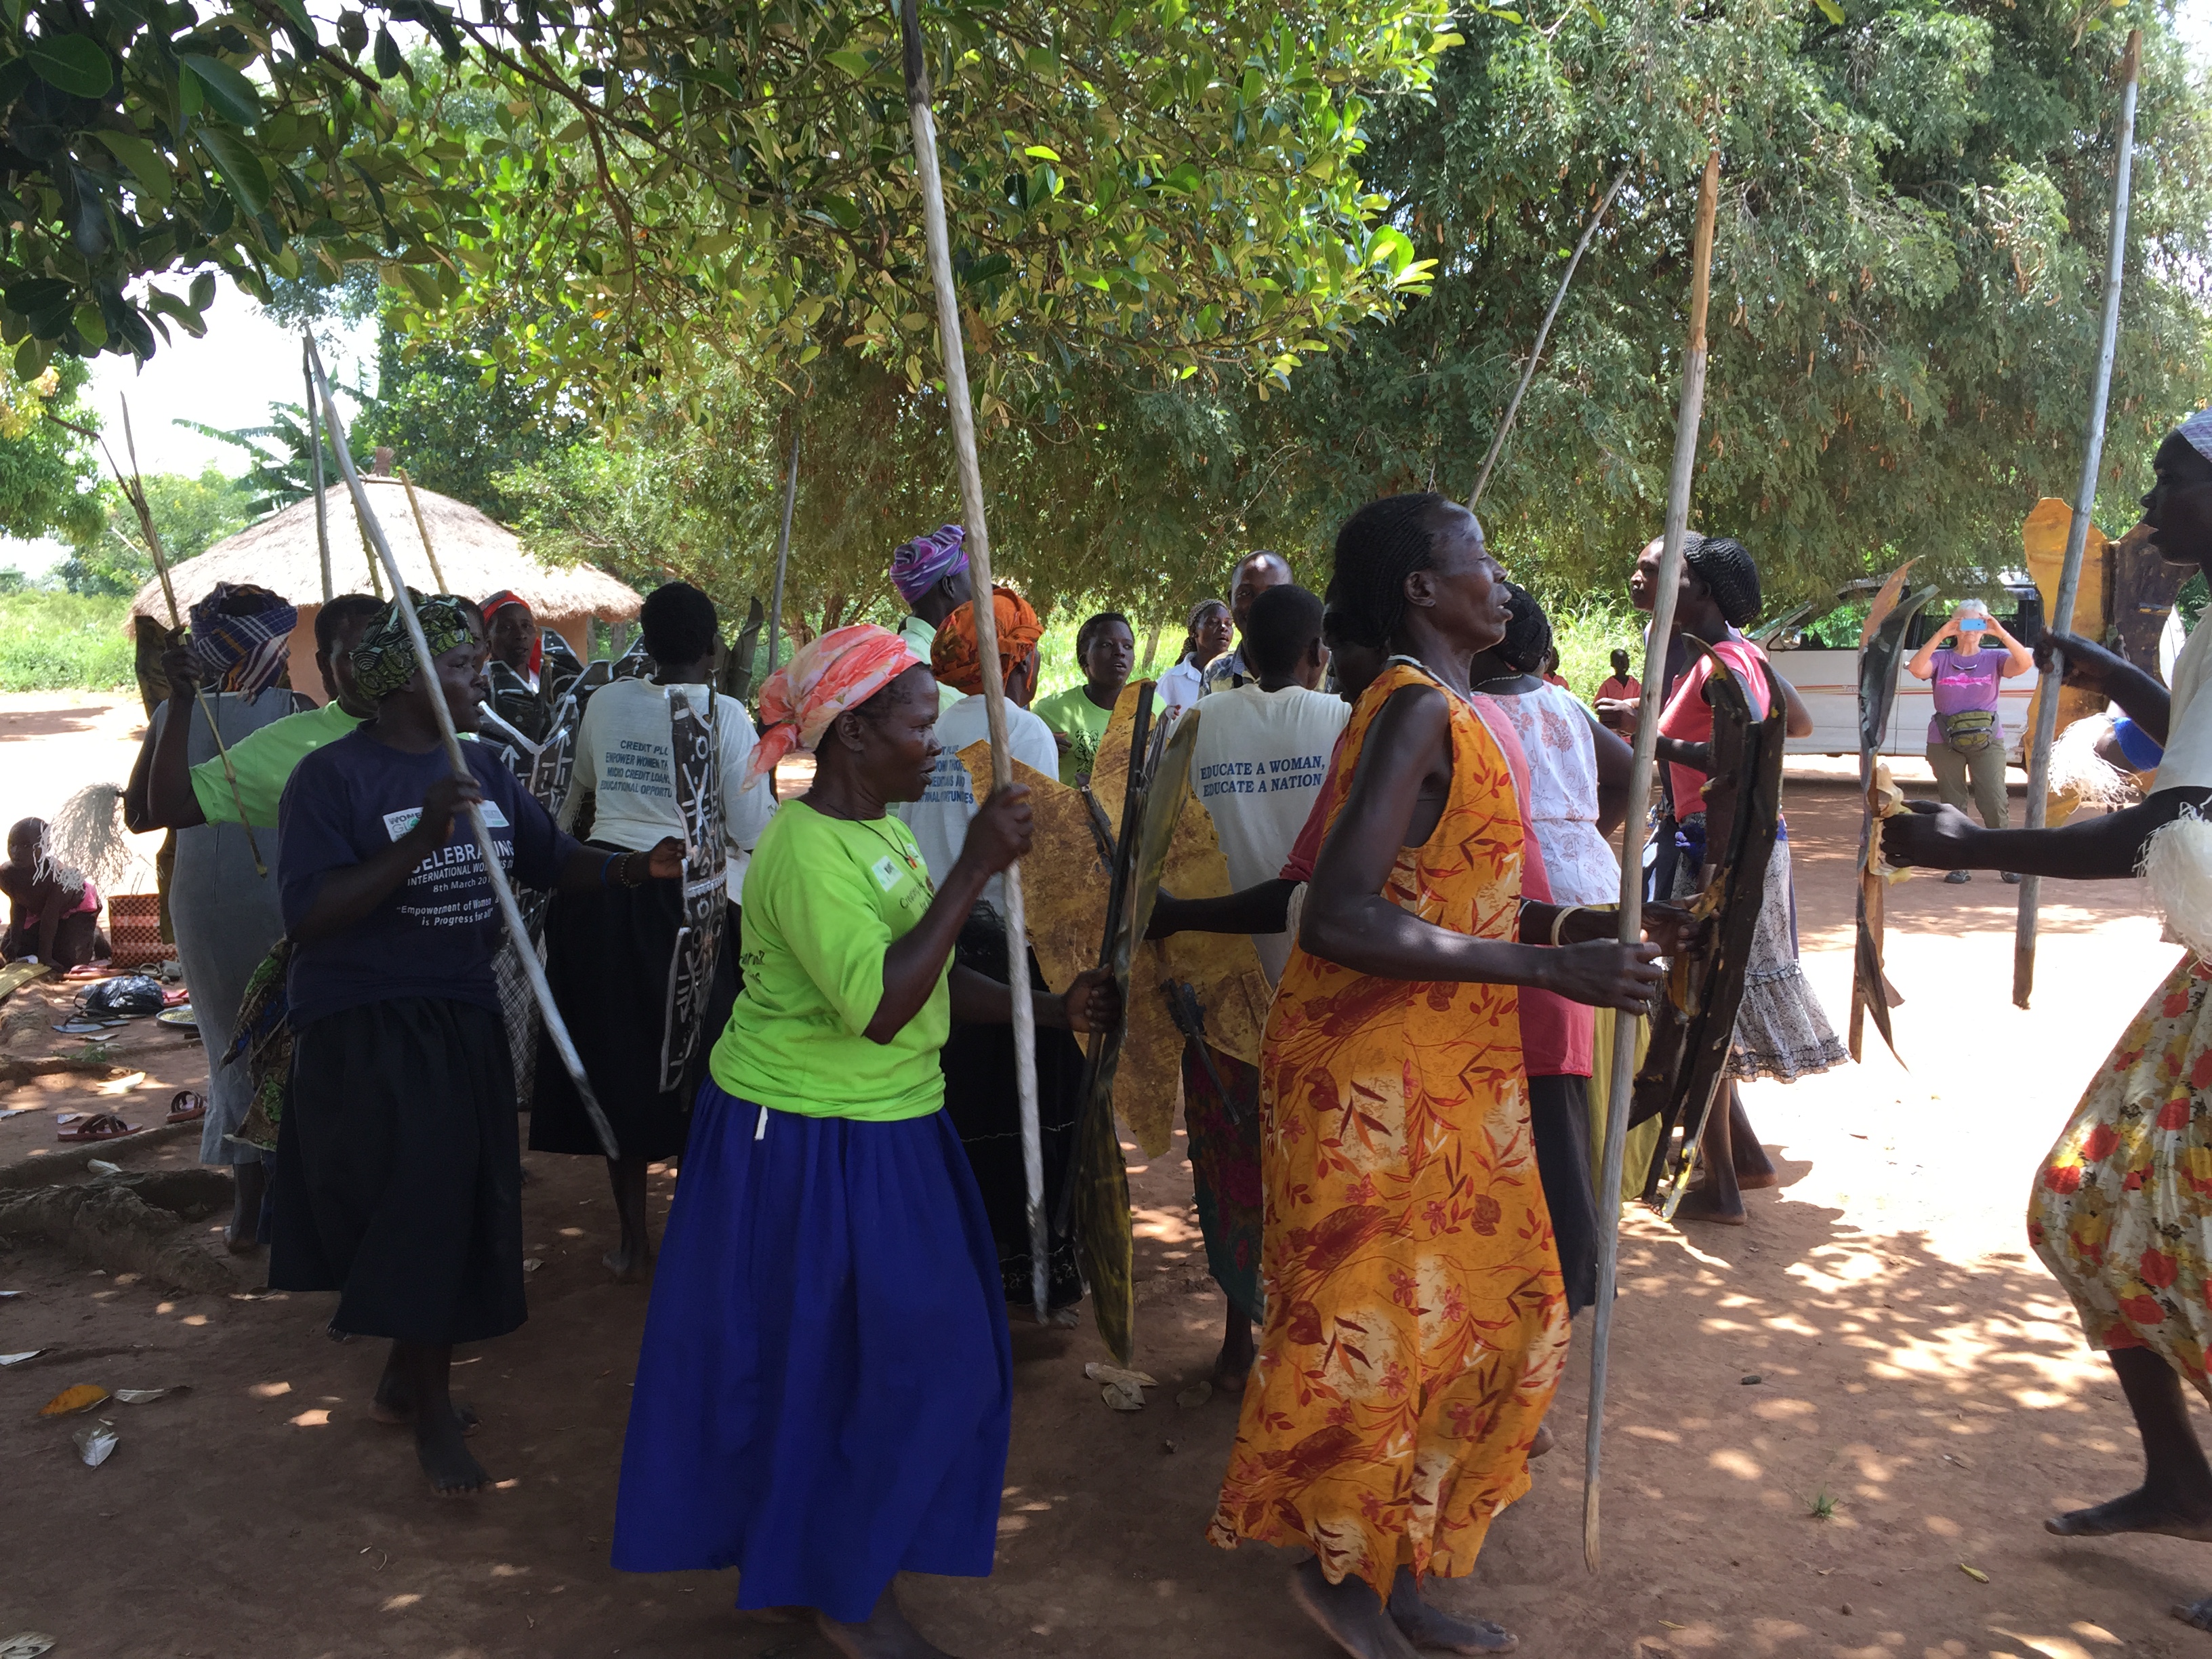 Fall 2015: Exploring Gulu with Karen Sugar - Women's Global